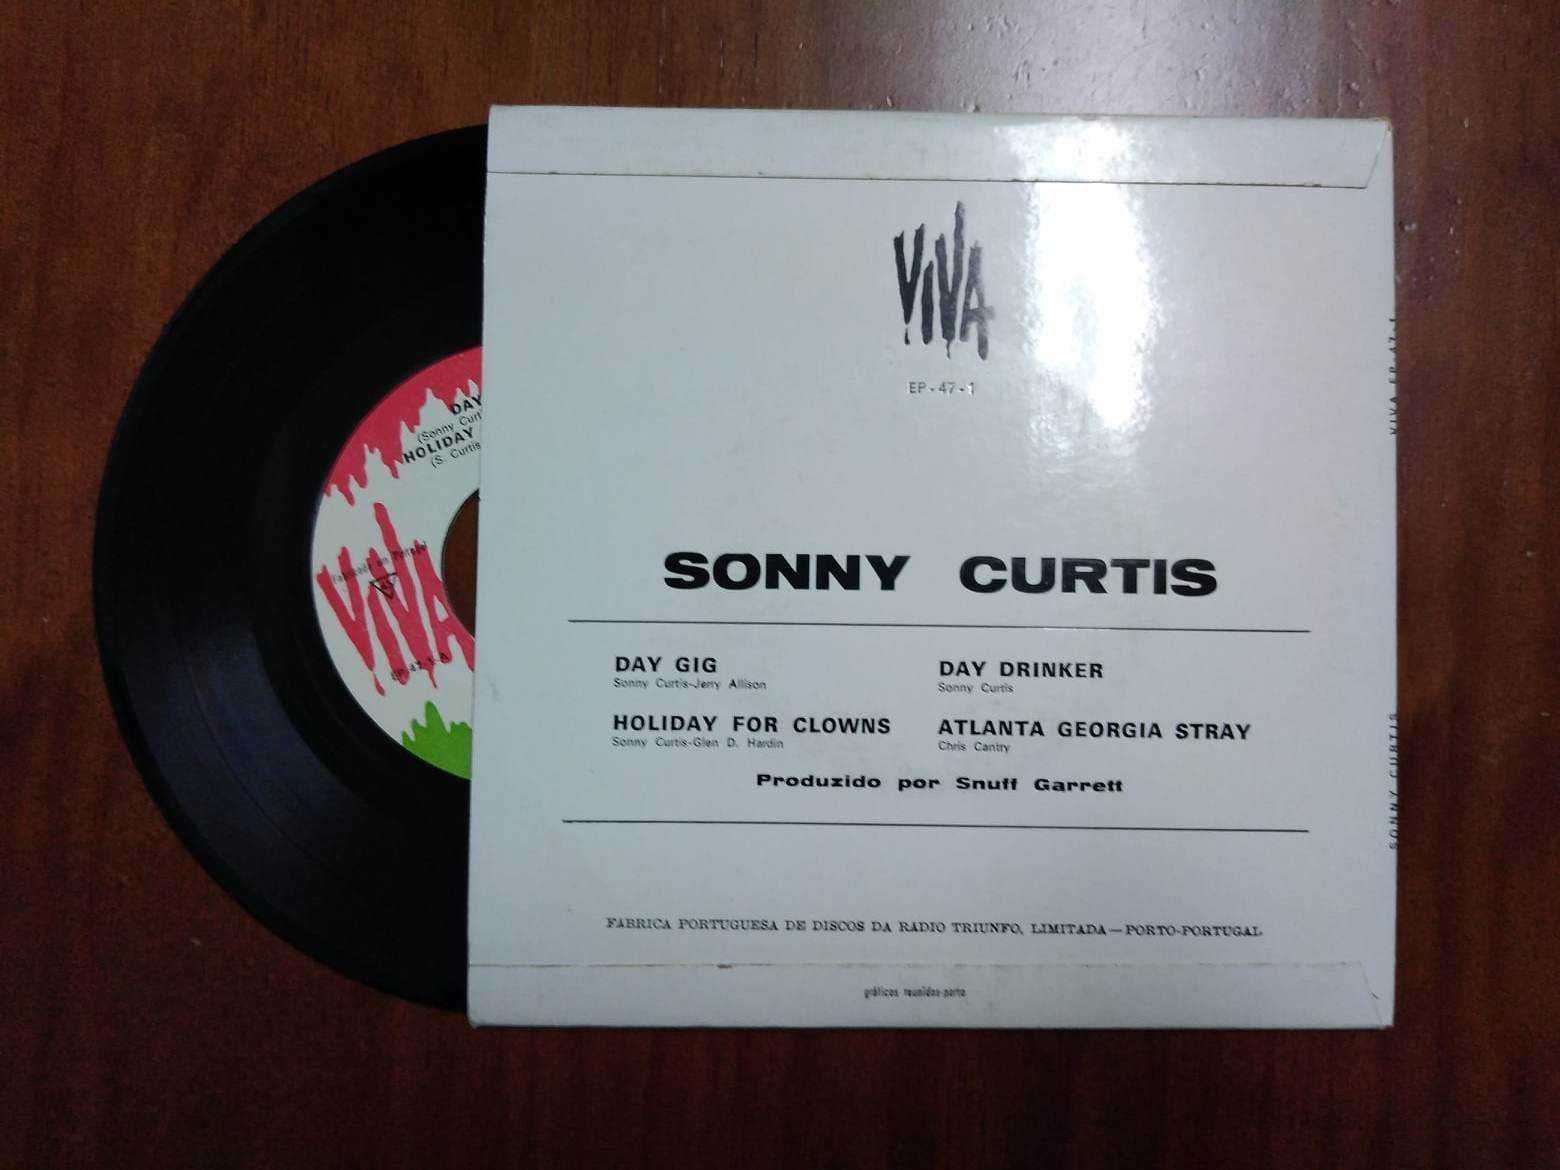 Disco de viniL (single) - Sonny Curtis *VIVA*